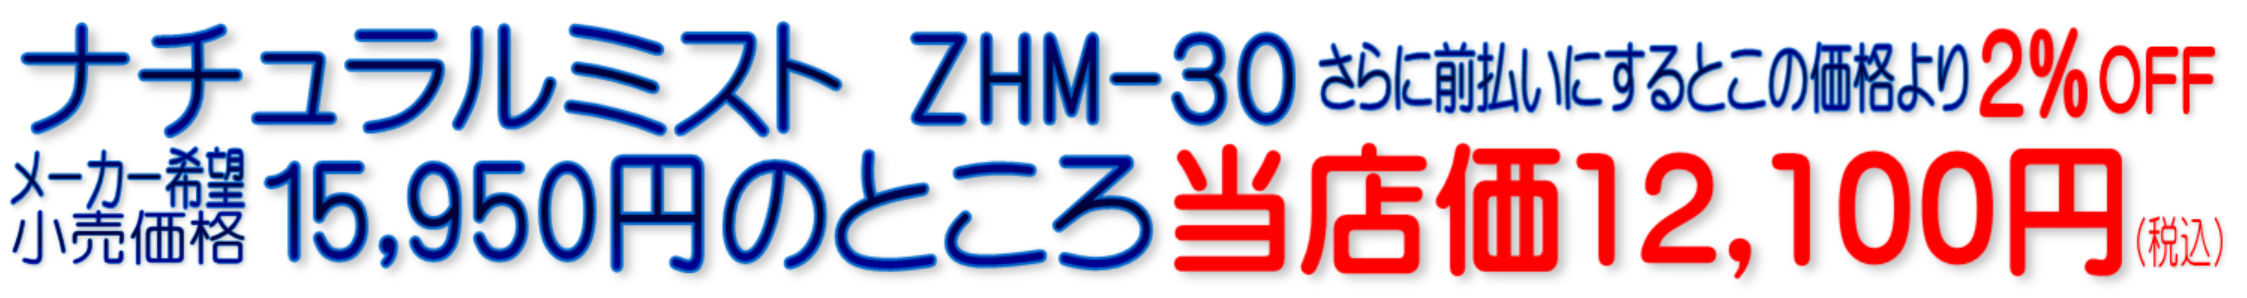 ZHM-30 ナチュラルミスト